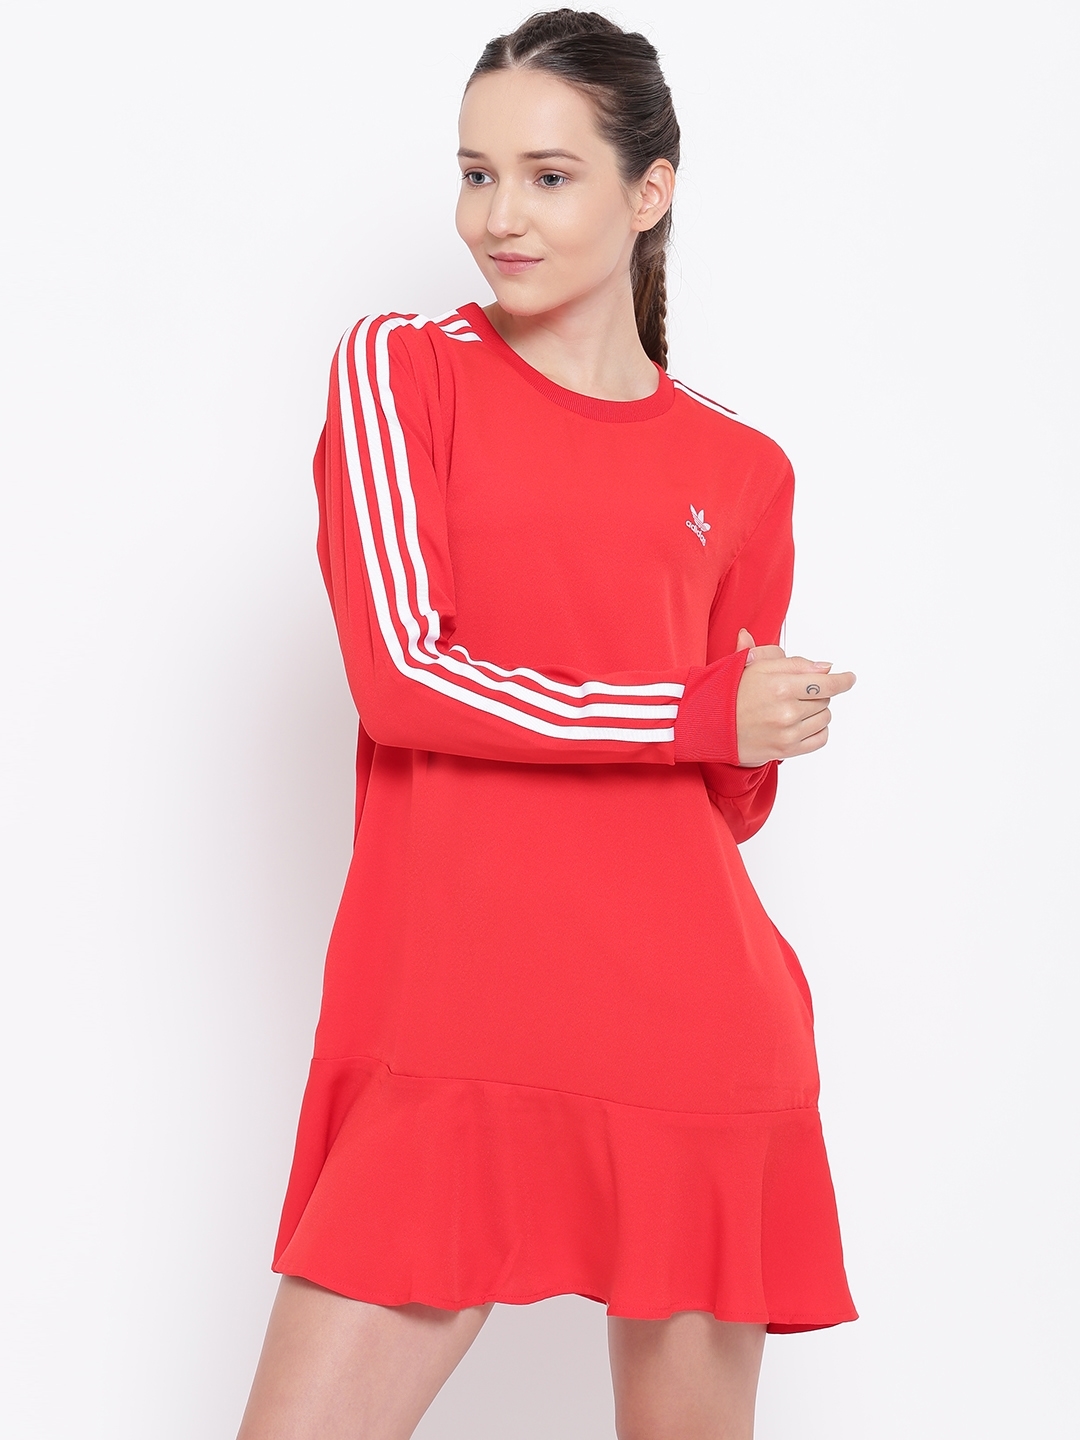 womens red adidas dress